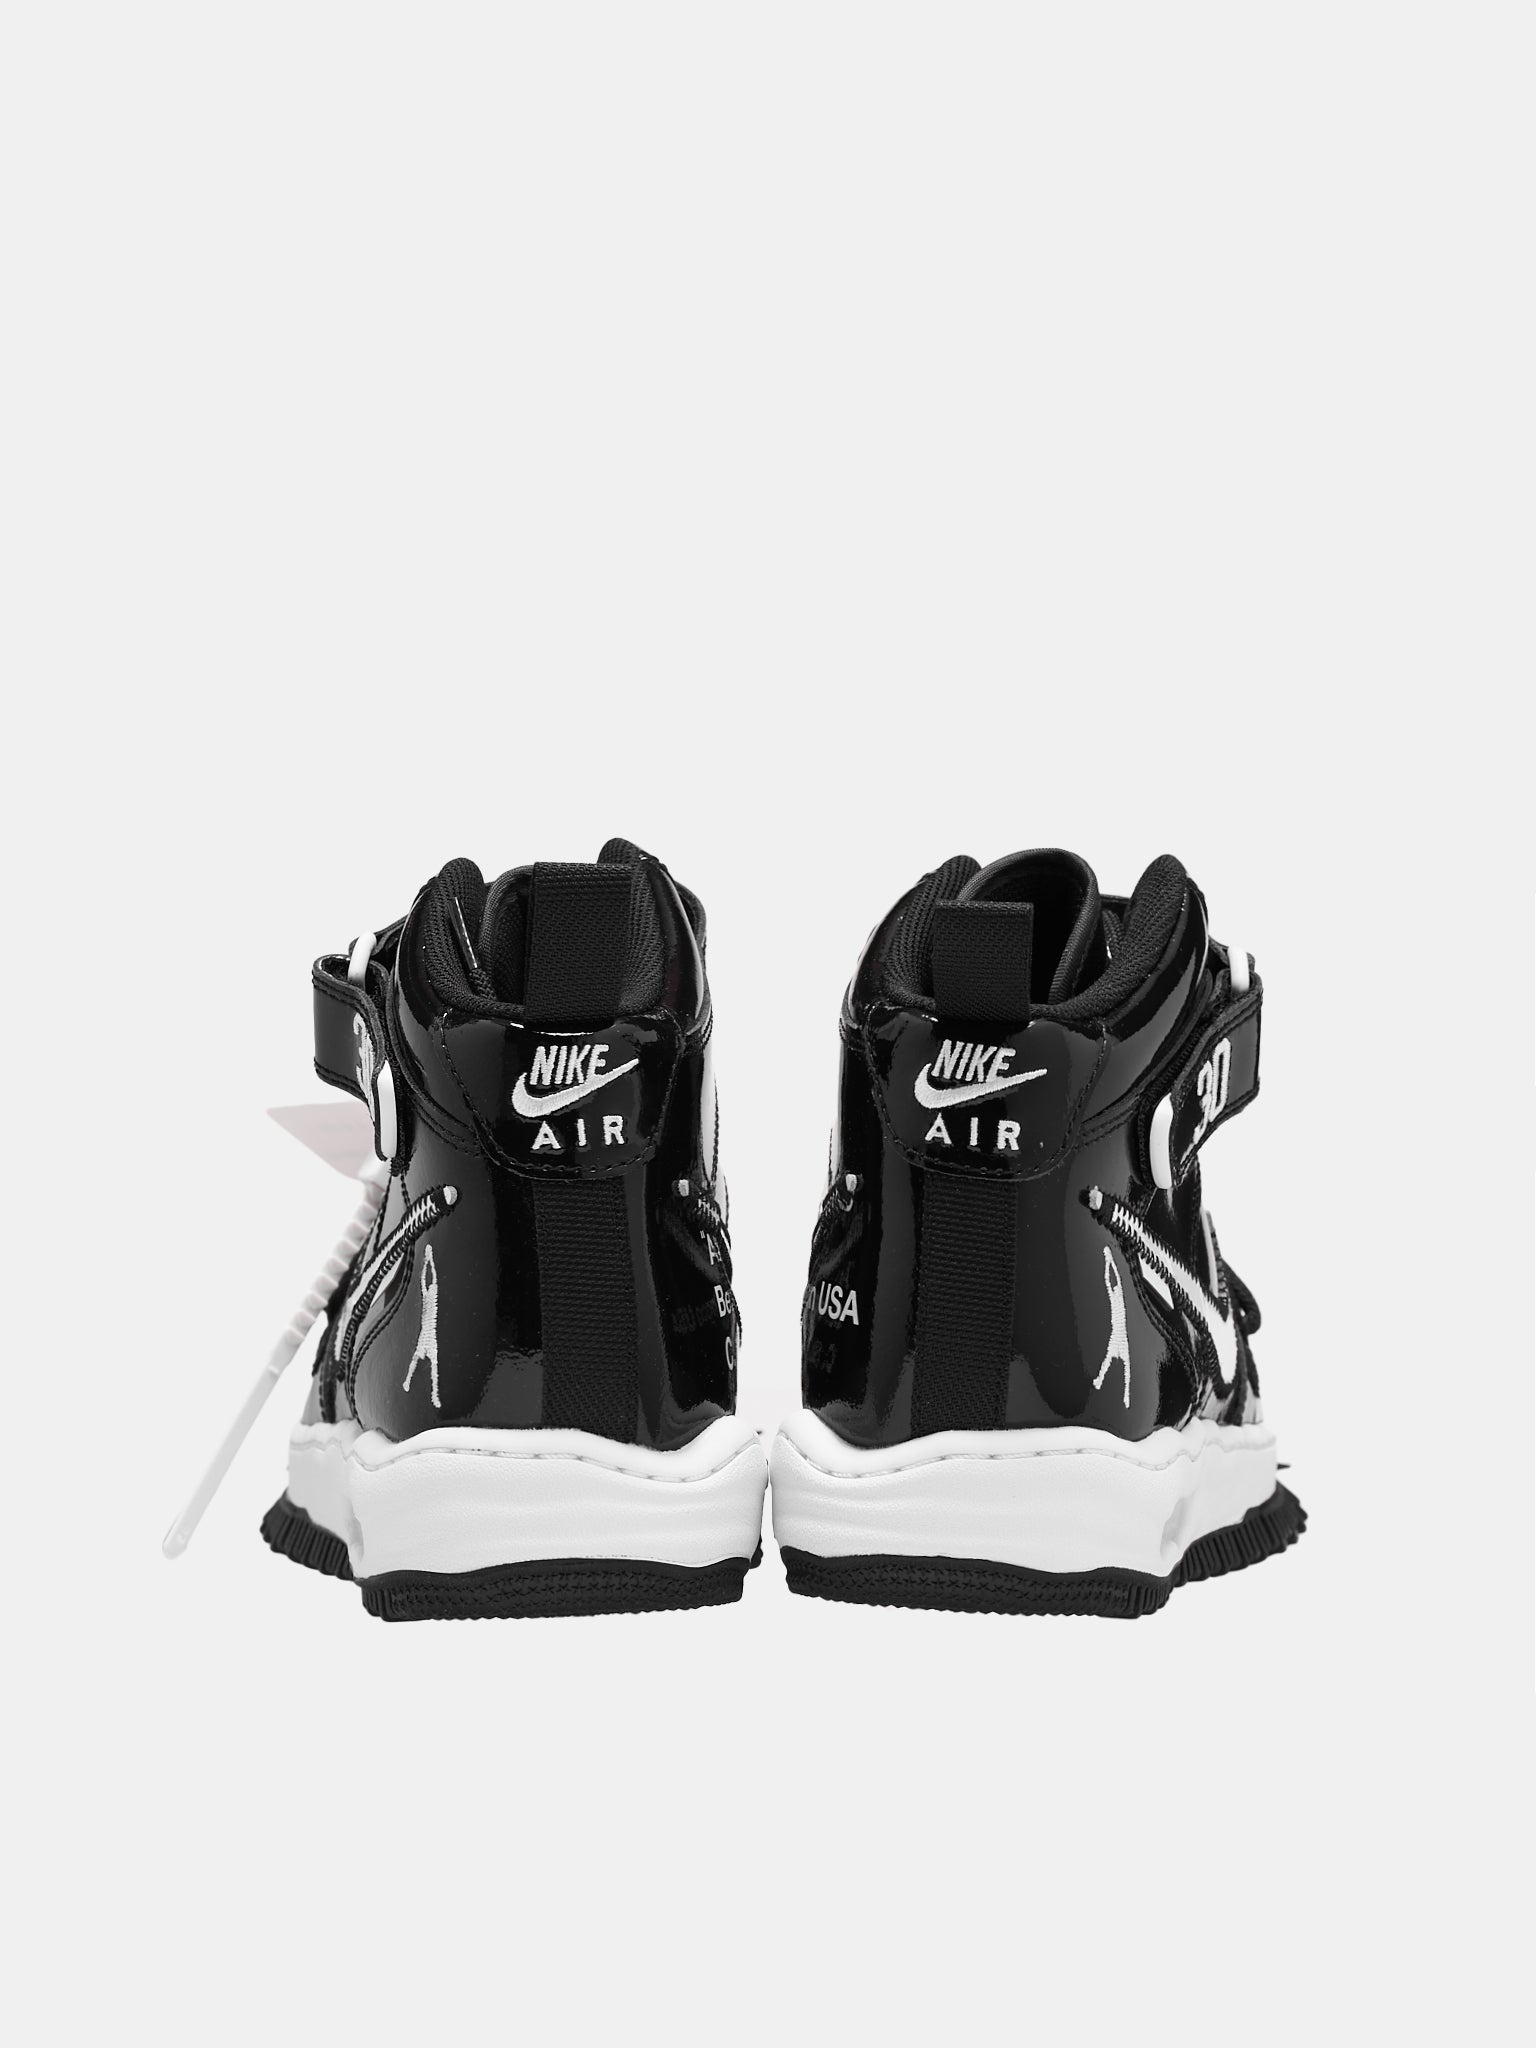 Off-White Nike Air Force 1 Mid Sheed Black White